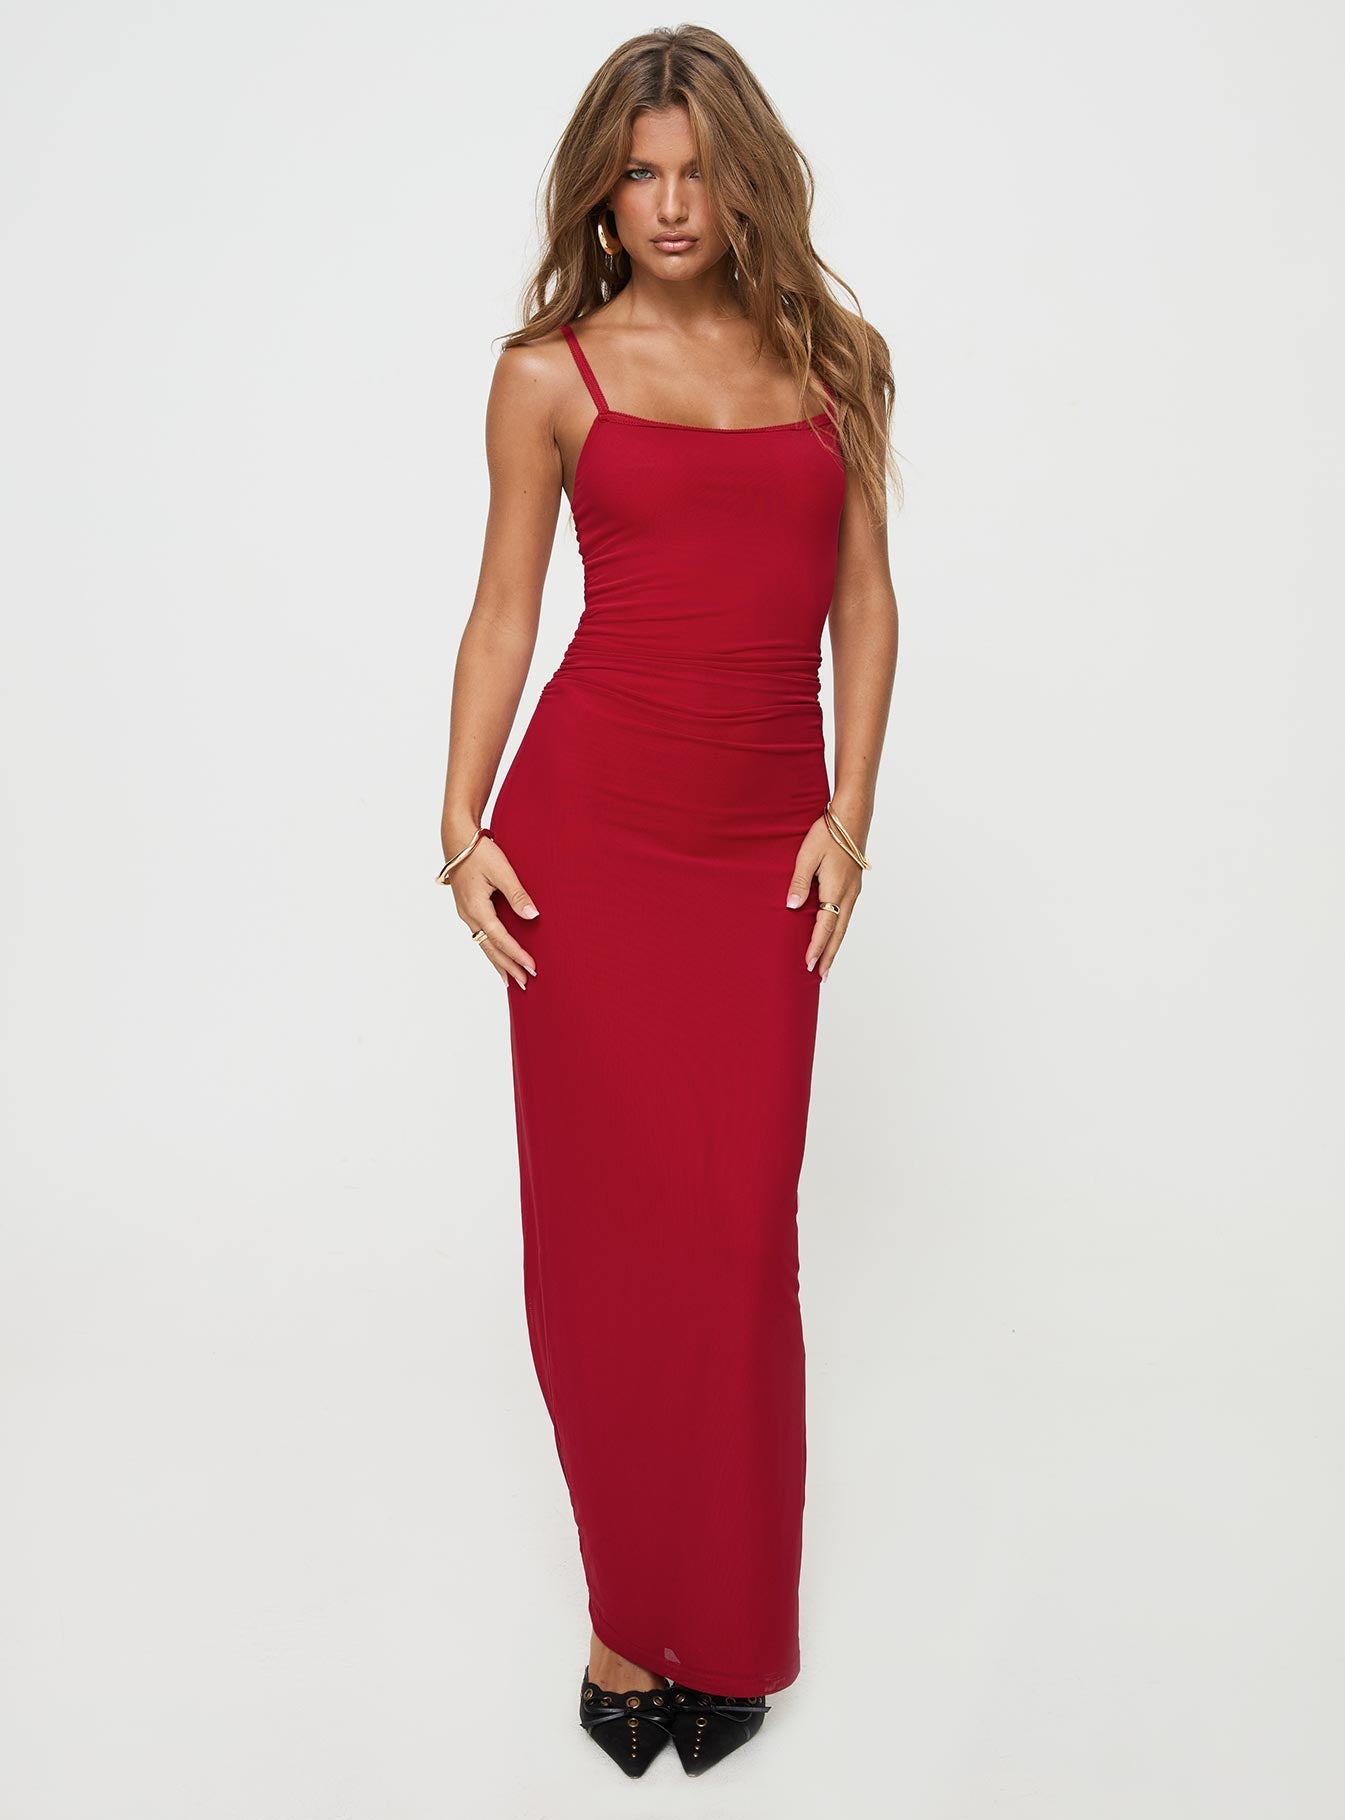 Shop Formal Dress - Apolline Maxi Dress Red sixth image